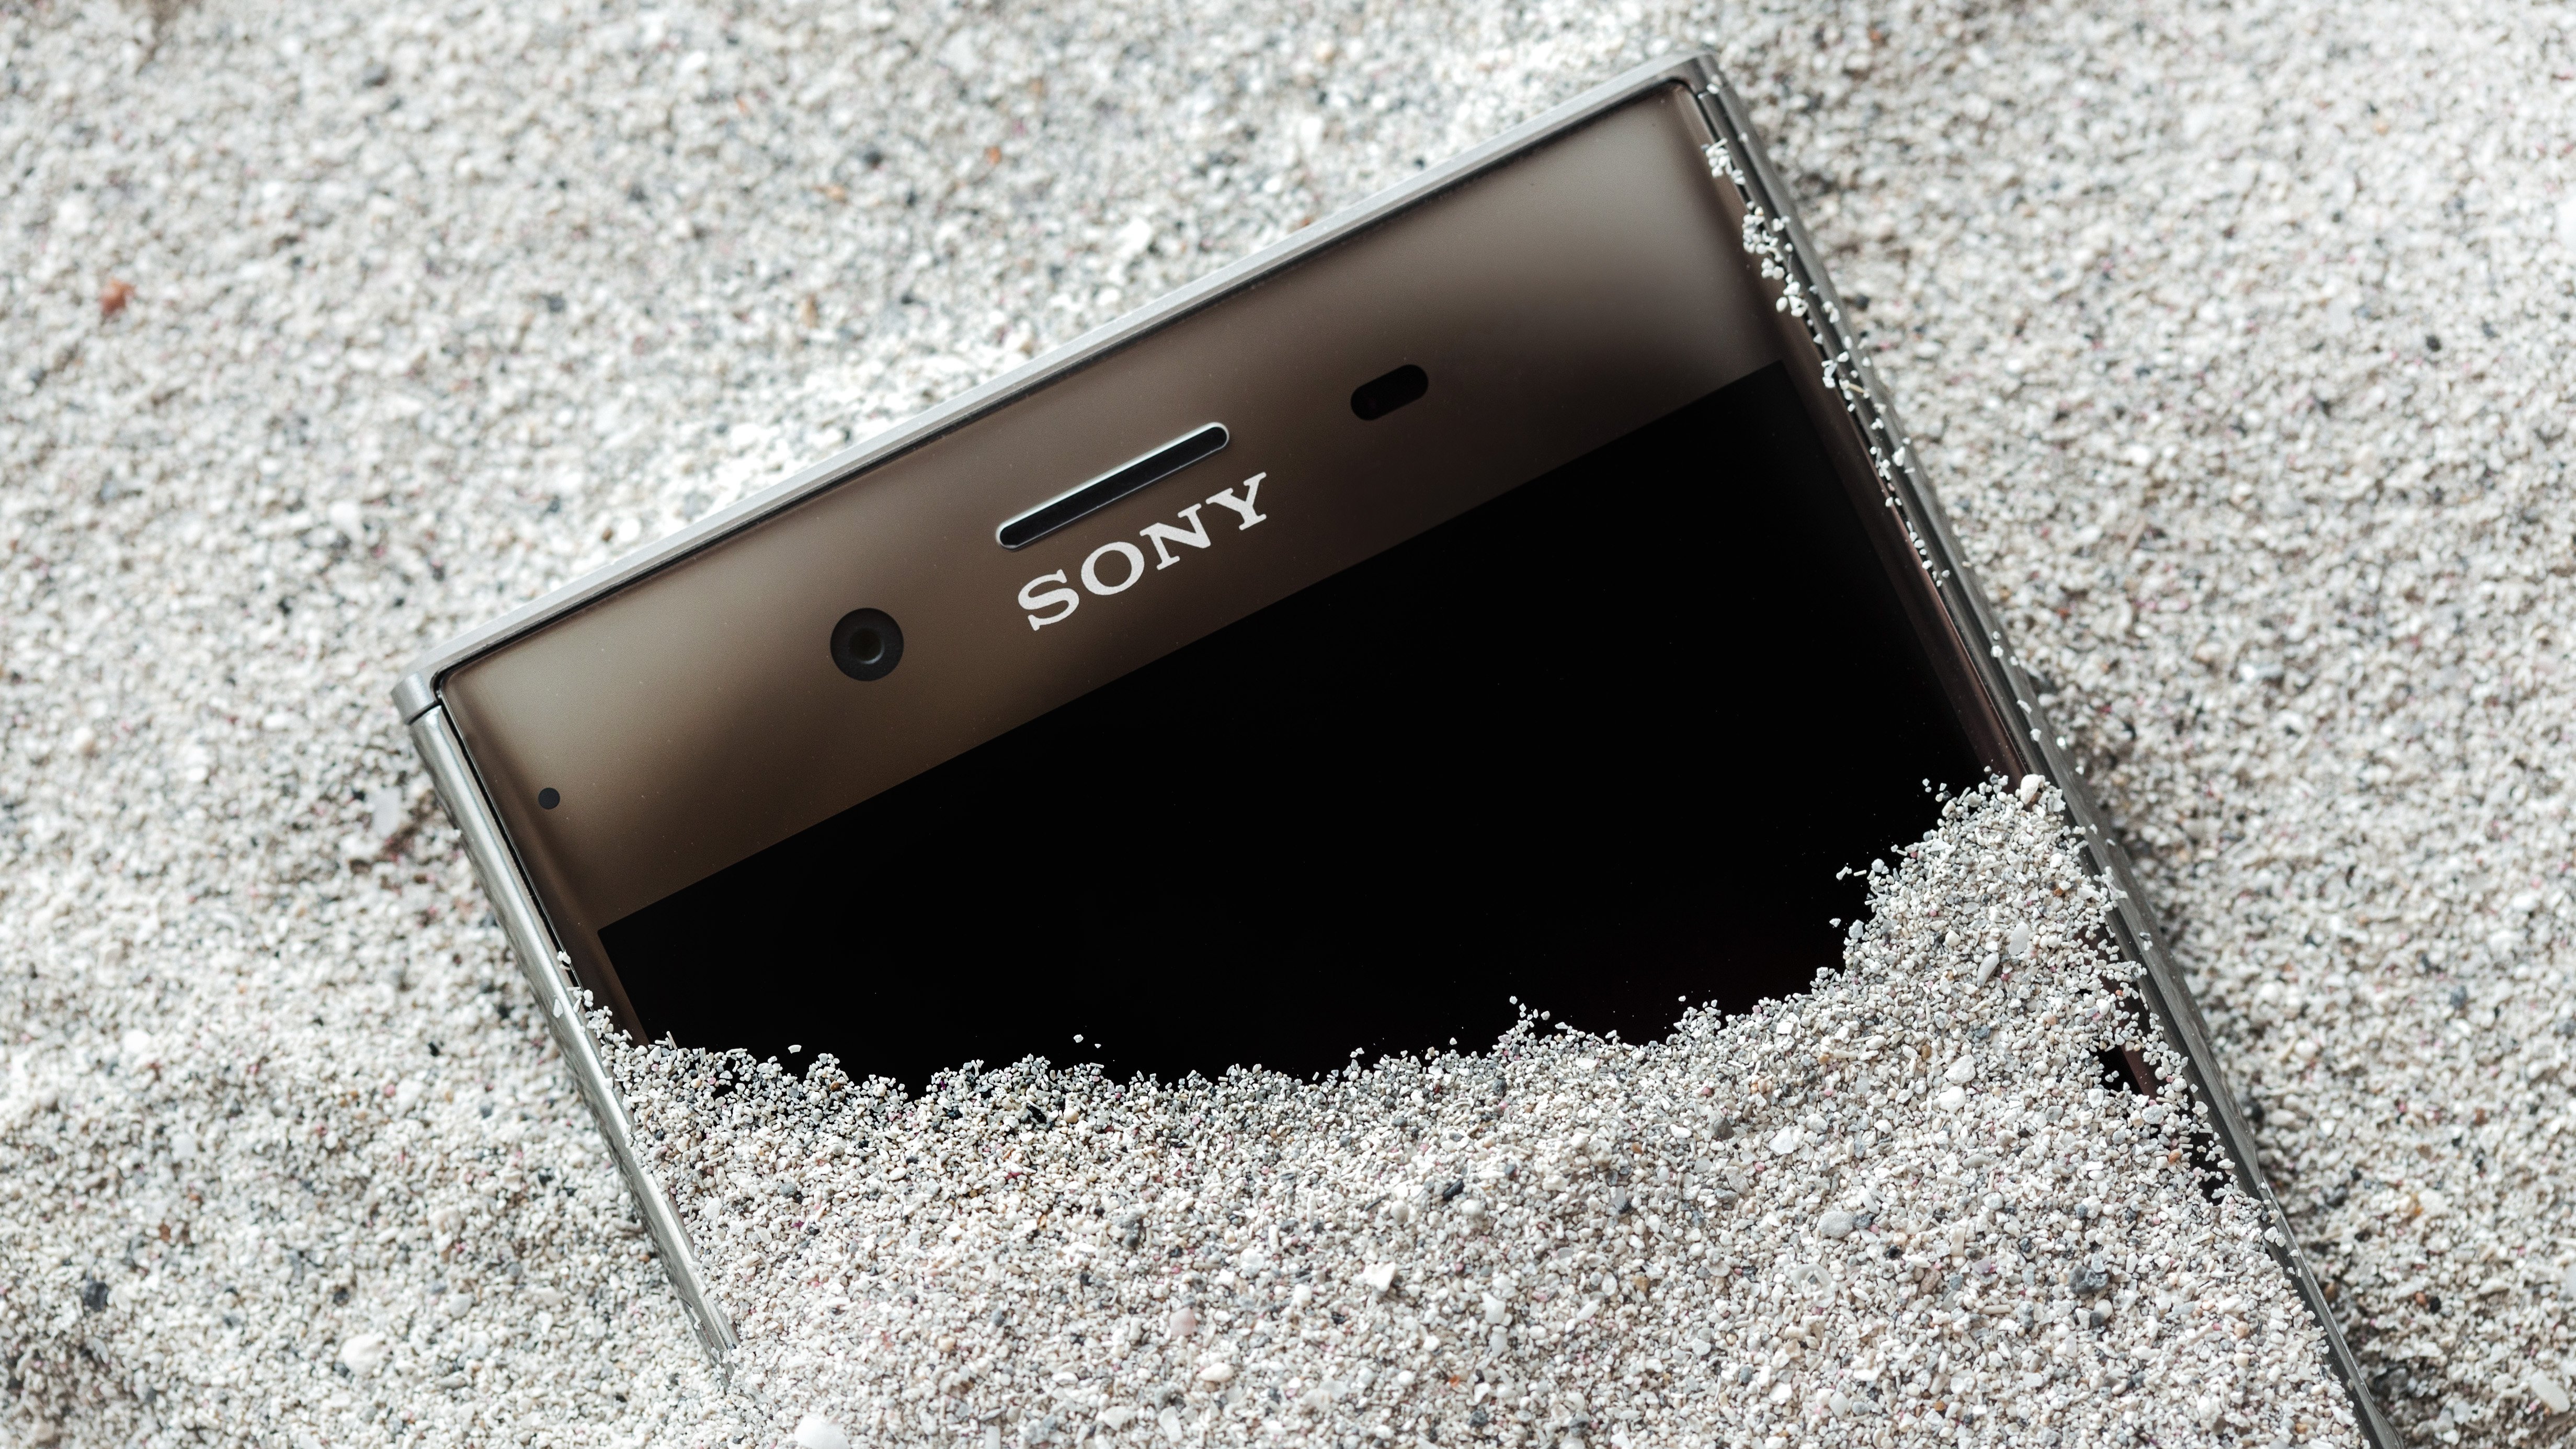 Sony Xperia XZ Premium review: Impressive hardware with some 